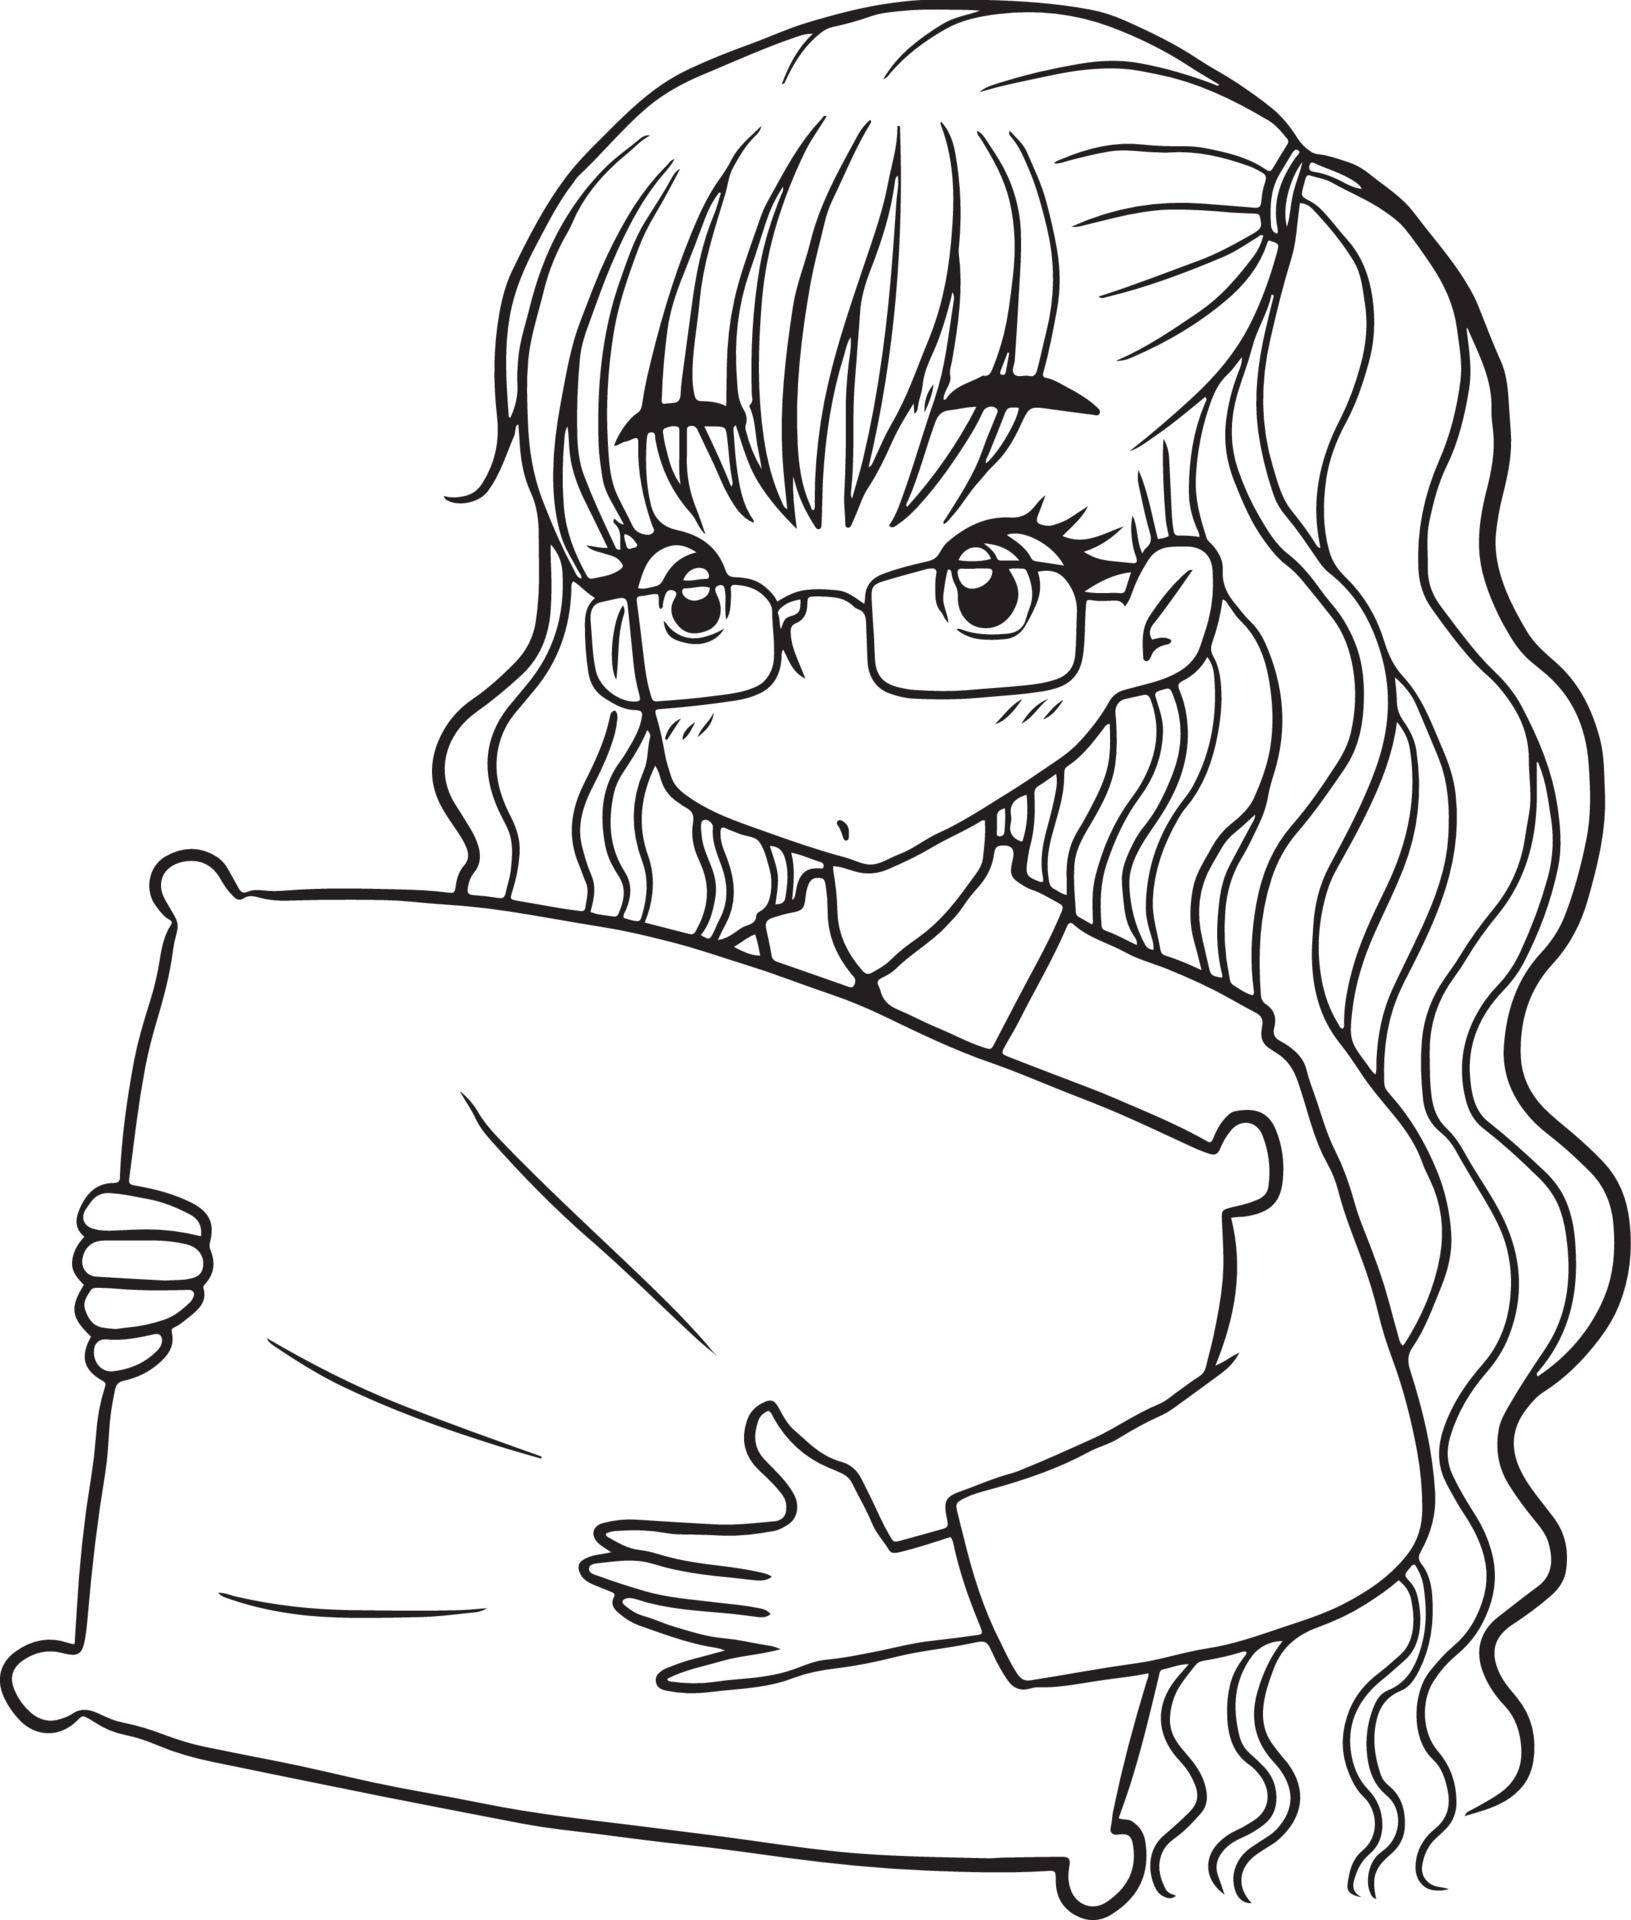 Premium Vector  Cartoon cute doodle coloring page kawaii anime  illustration clipart character chibi drawing manga